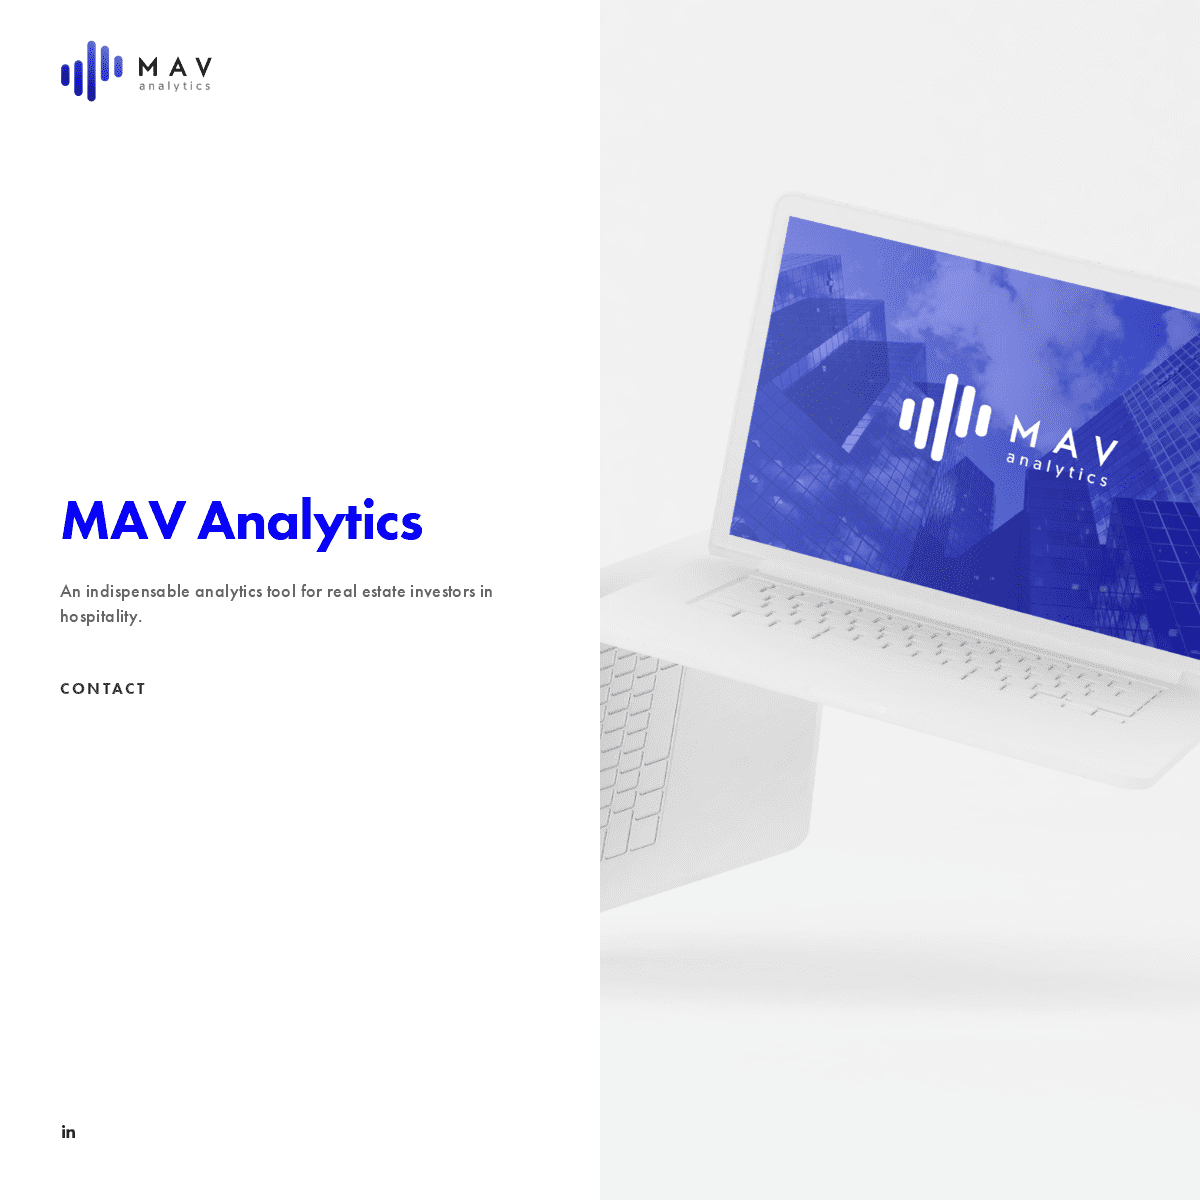 A complete backup of mav-analytics.com